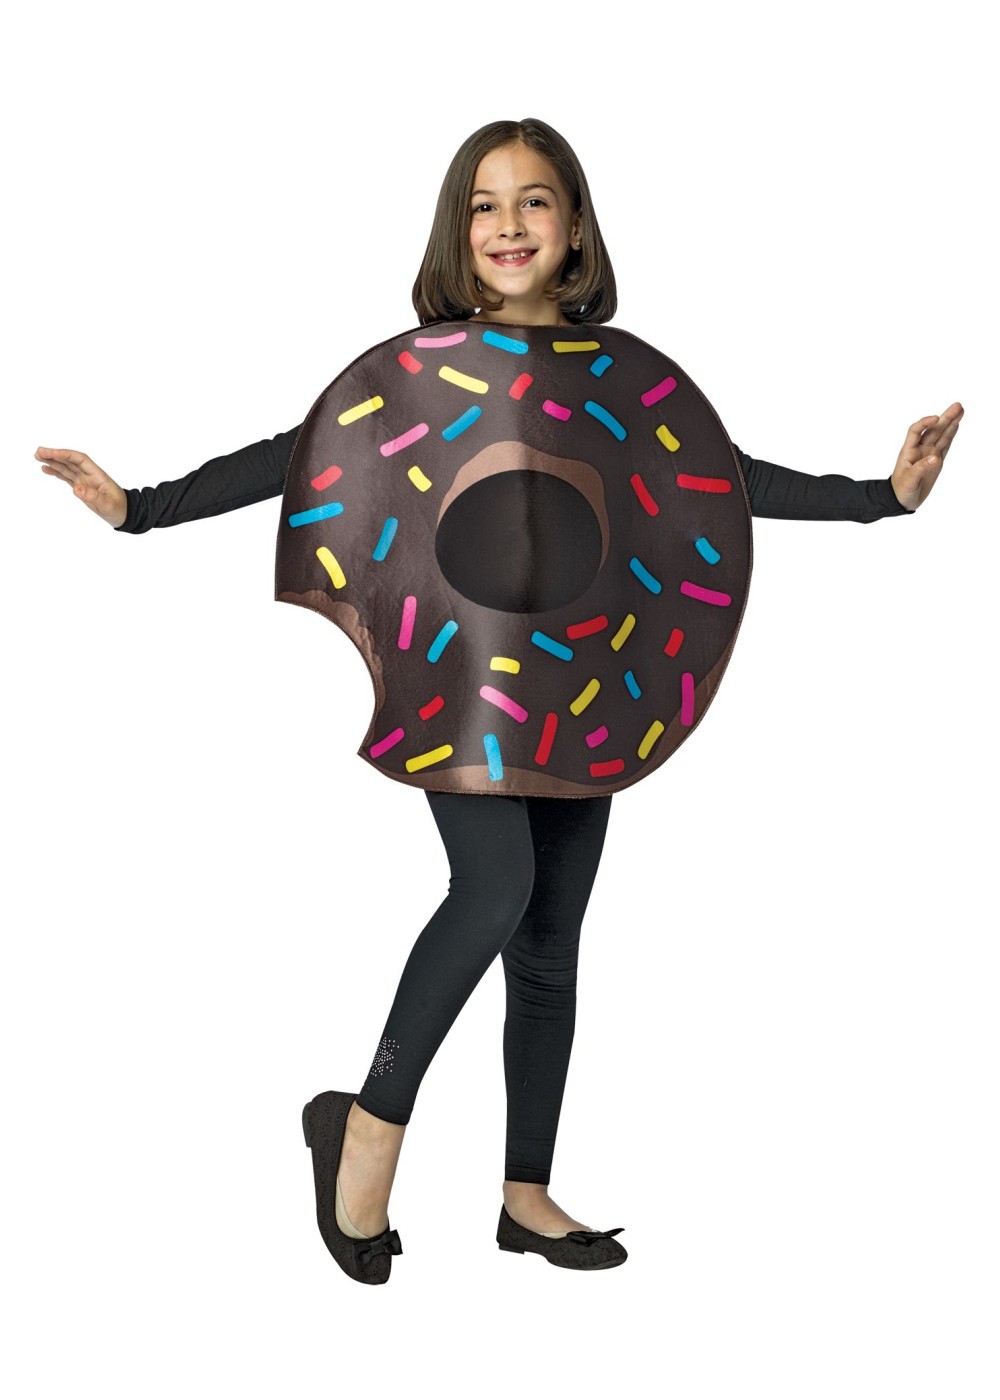 Bitten Chocolate Sprinkled Donut Girls Costume - Food Costumes